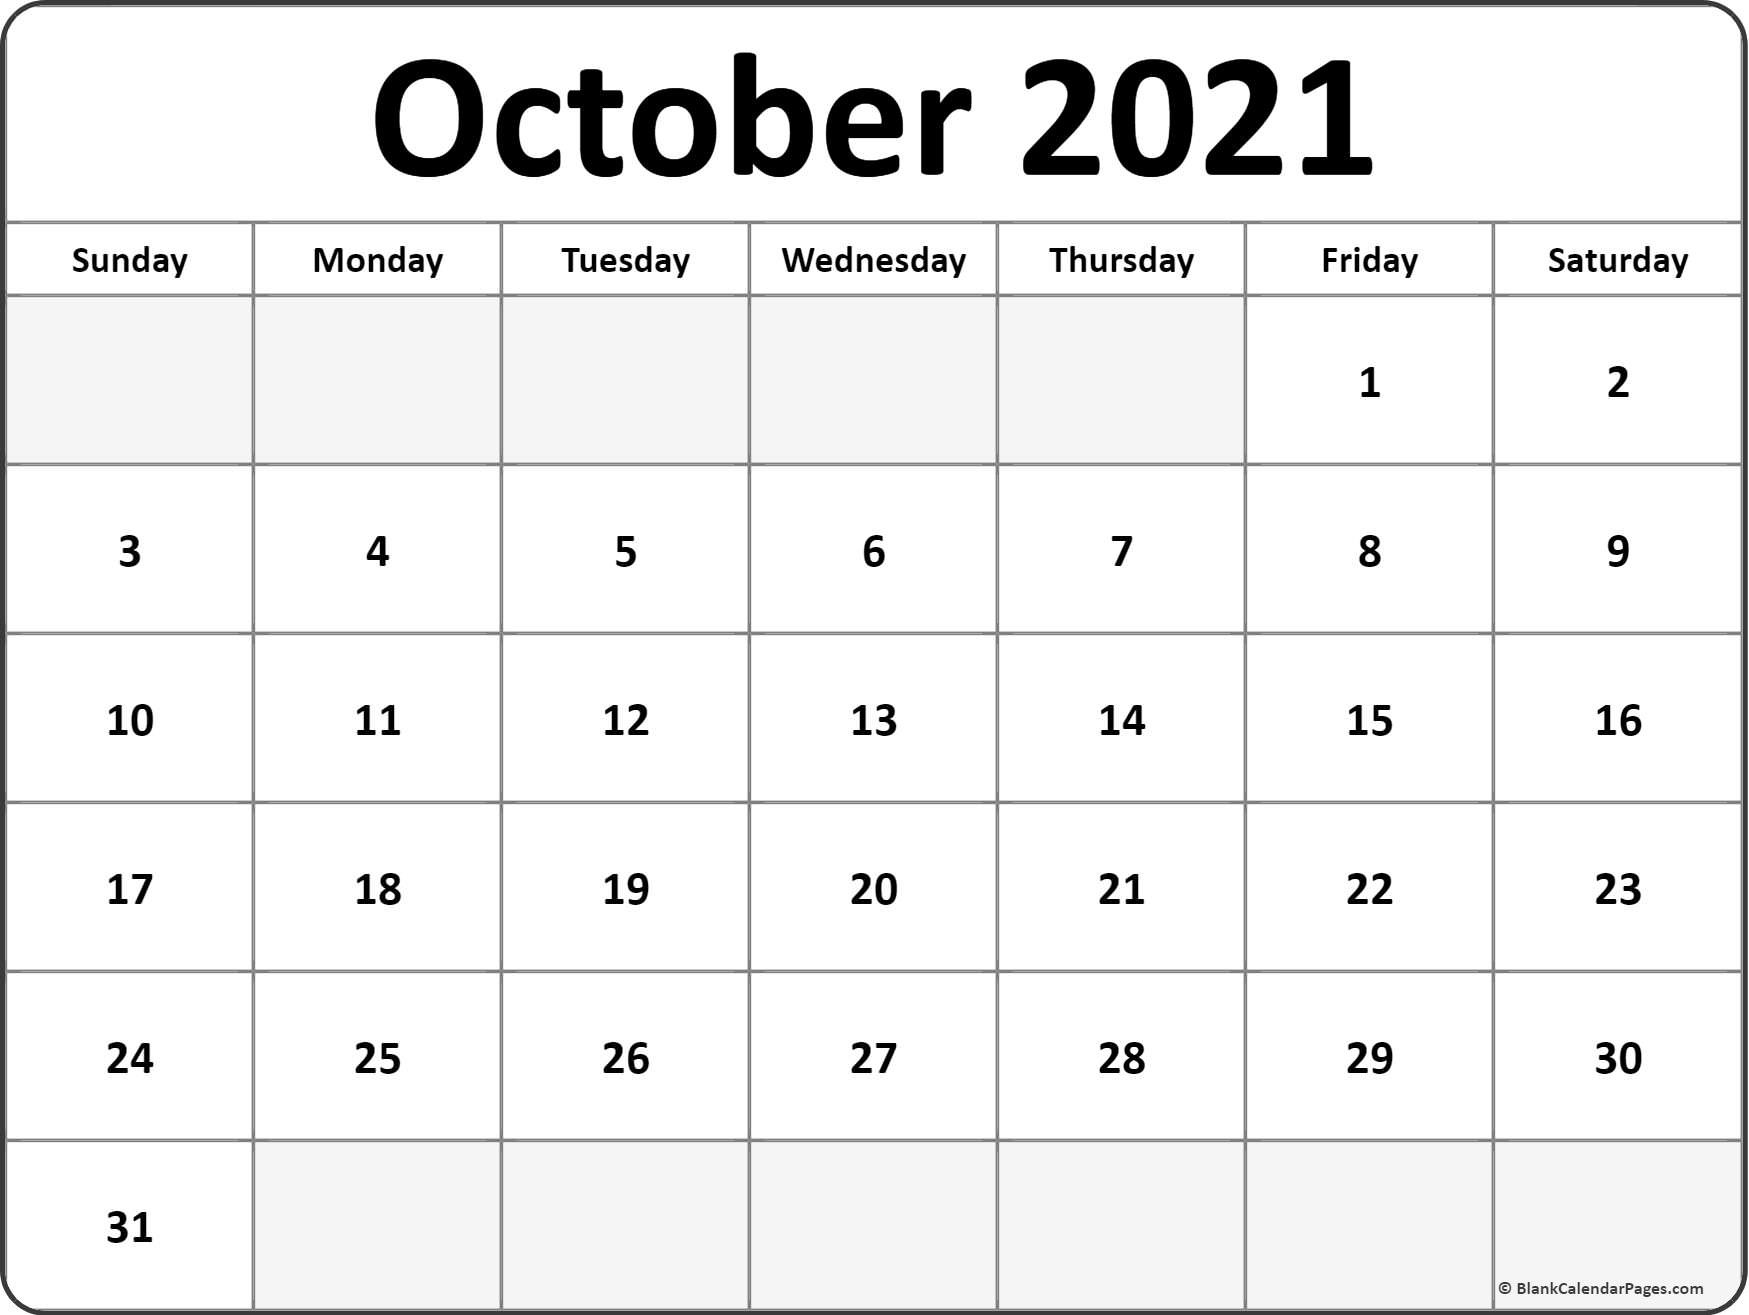 October 2021 Blank Calendar Templates.-Monthly Schedule Planner August 2021